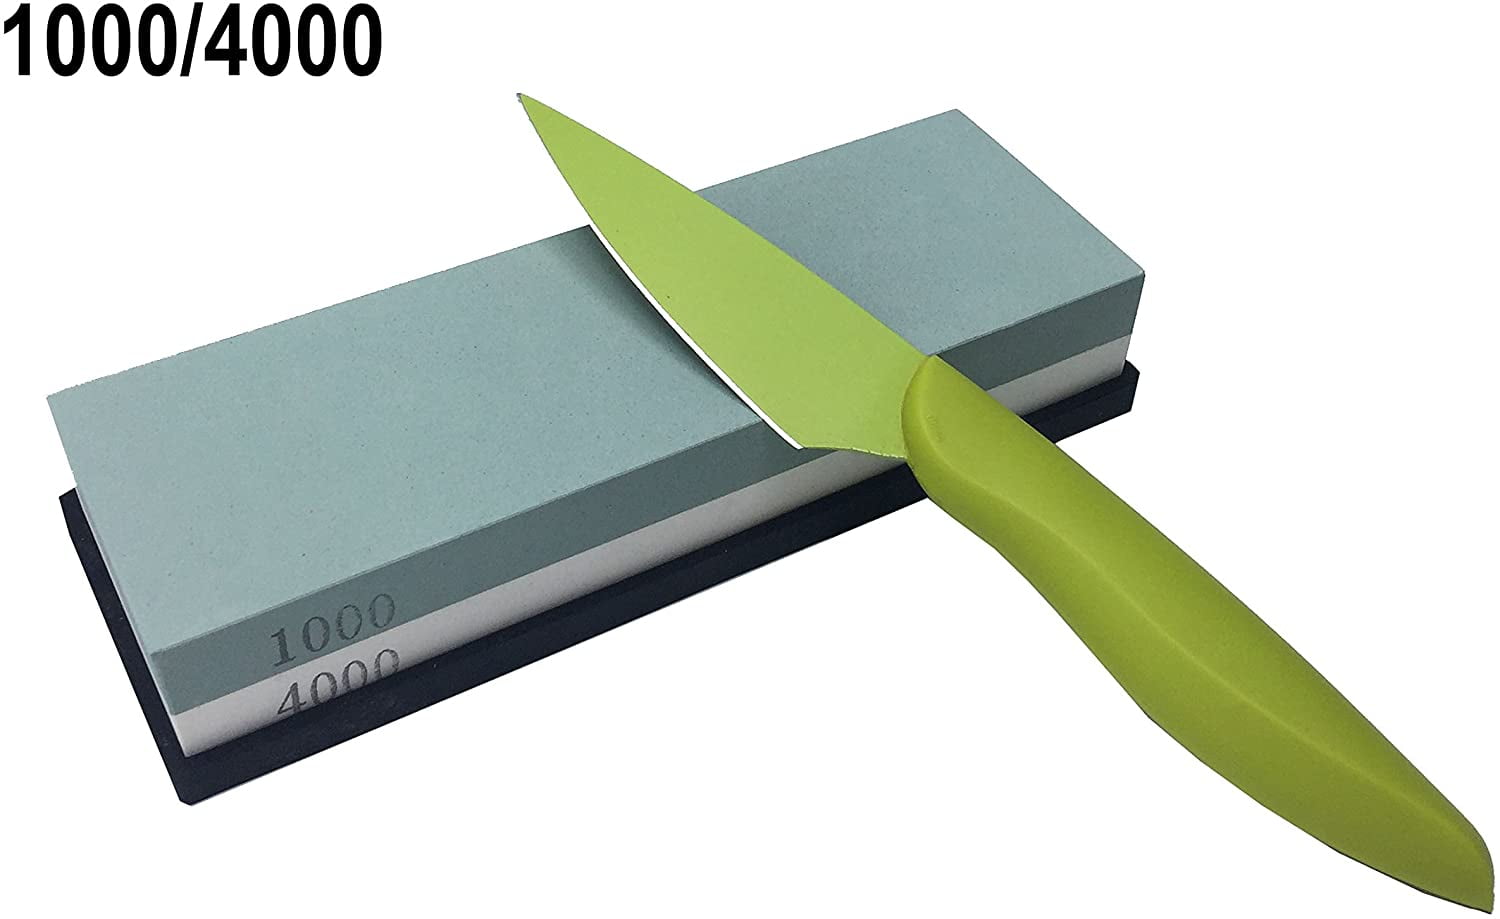 G.B.S Premium Whetstone Knife Sharpening Stone 2 Sided Grit 3000/8000 – GBS